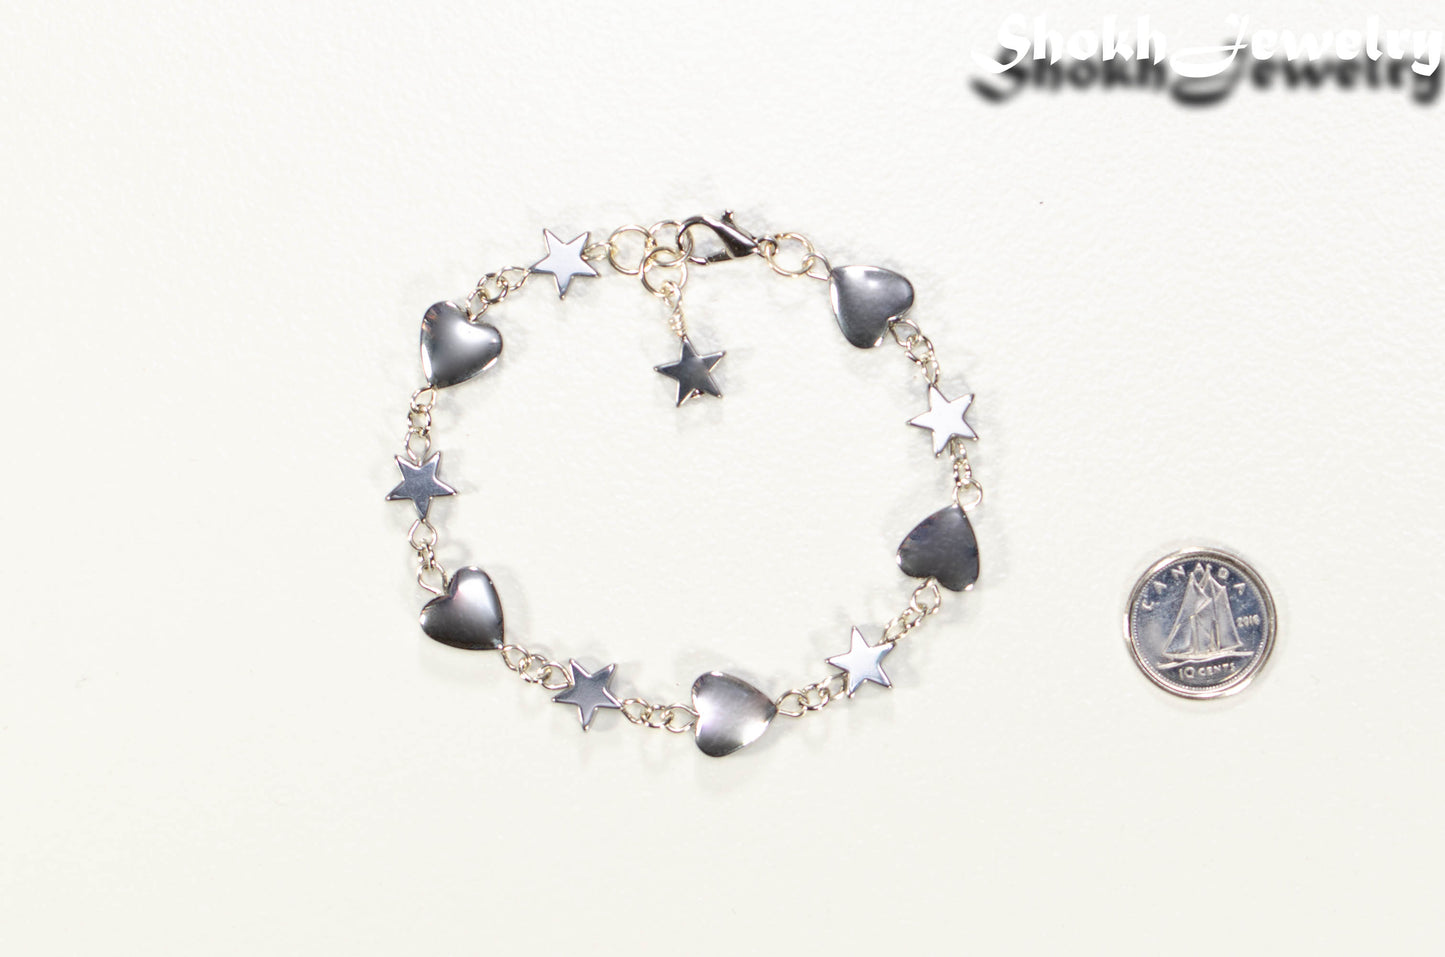 Handmade Hematite Heart and Star Link Bracelet beside a dime.